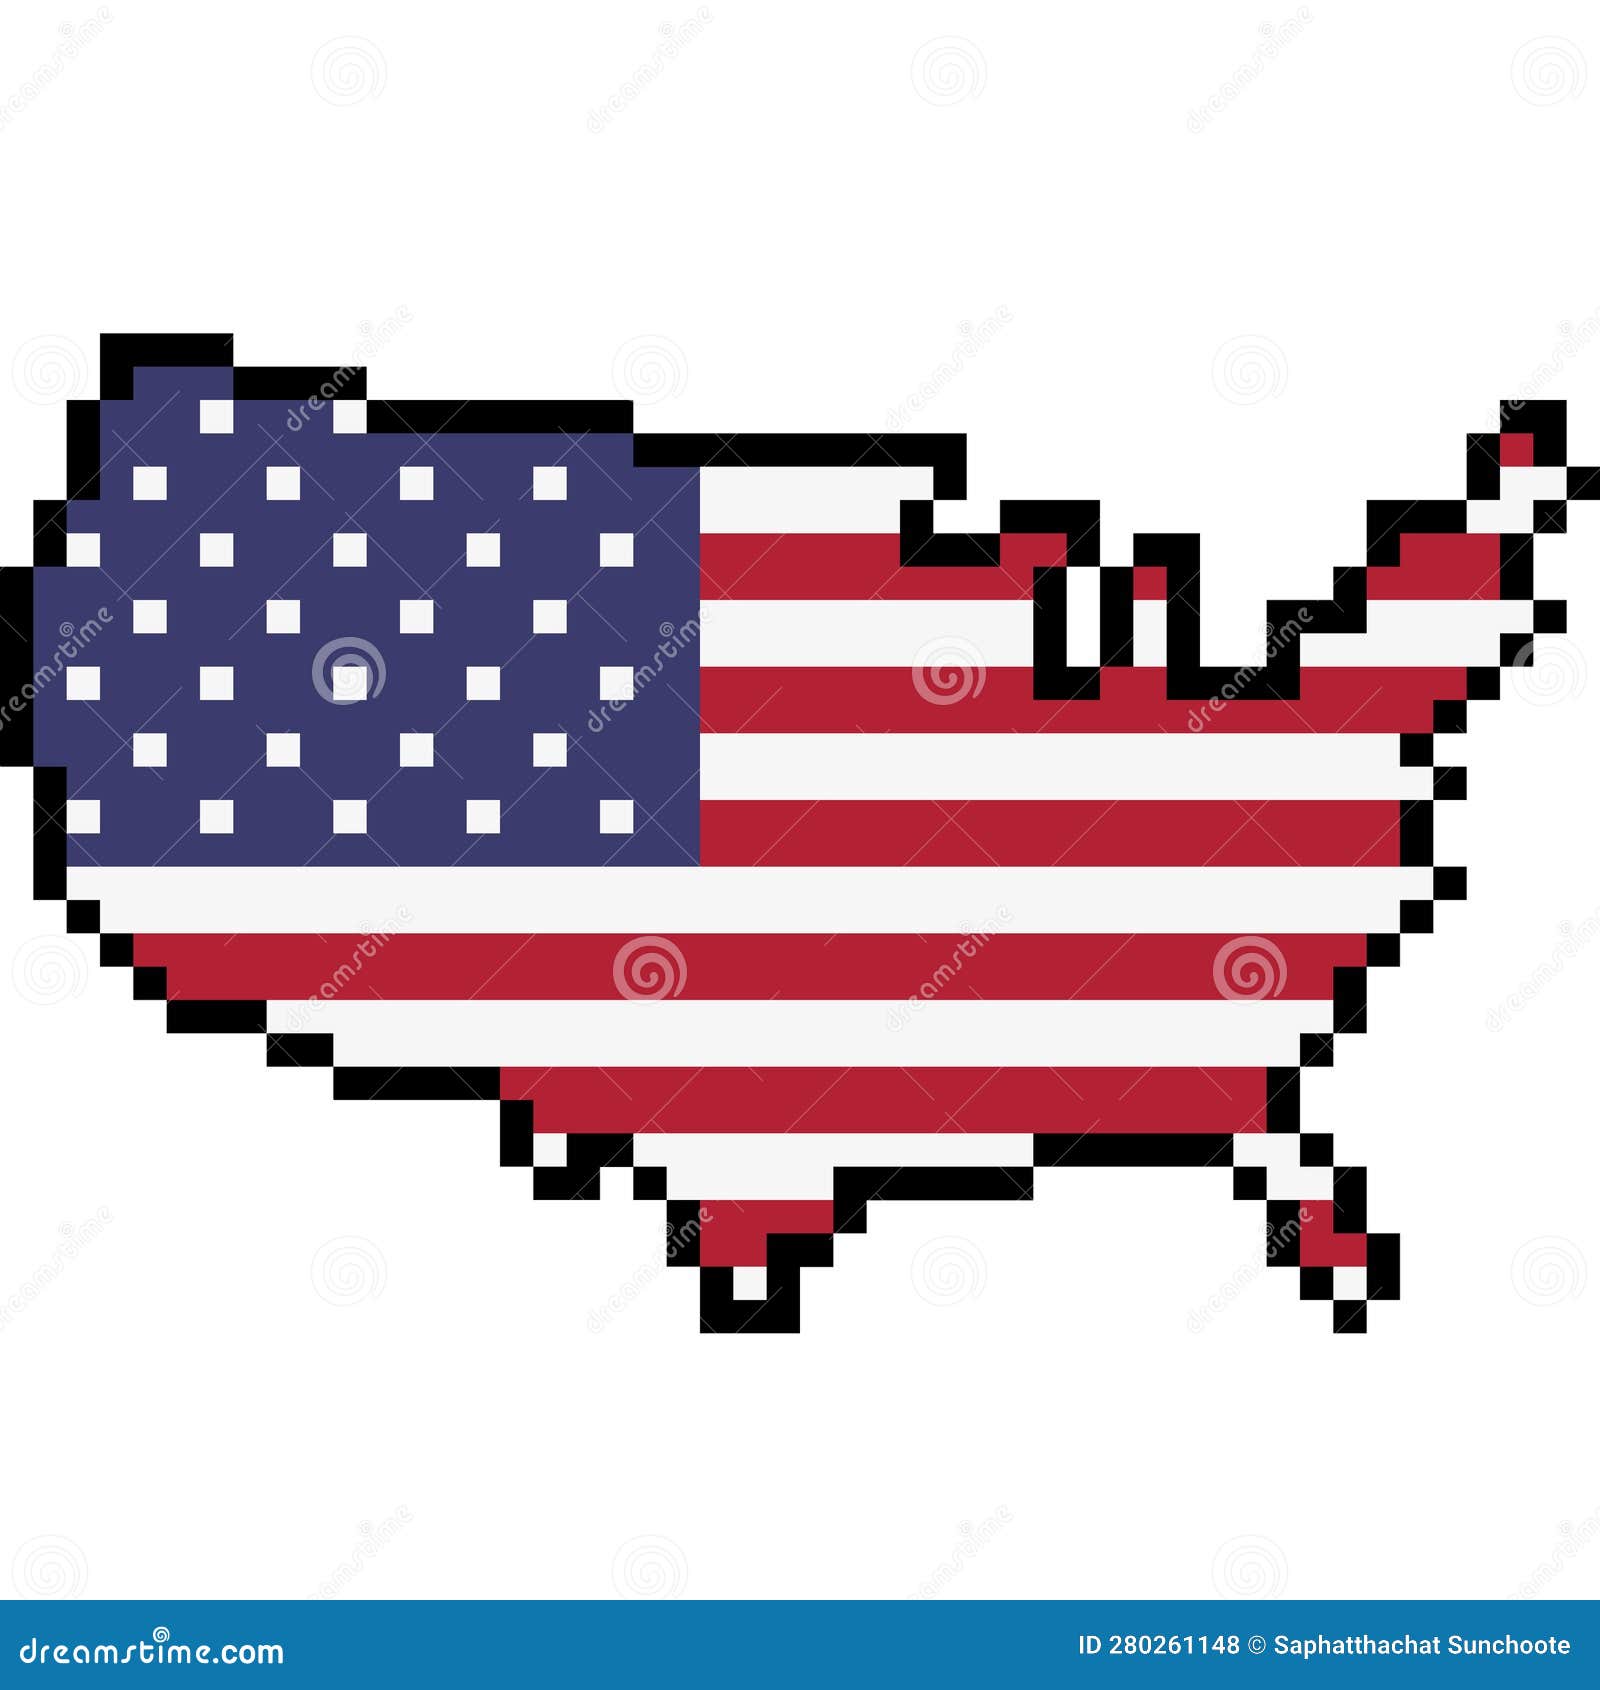 america pixel art